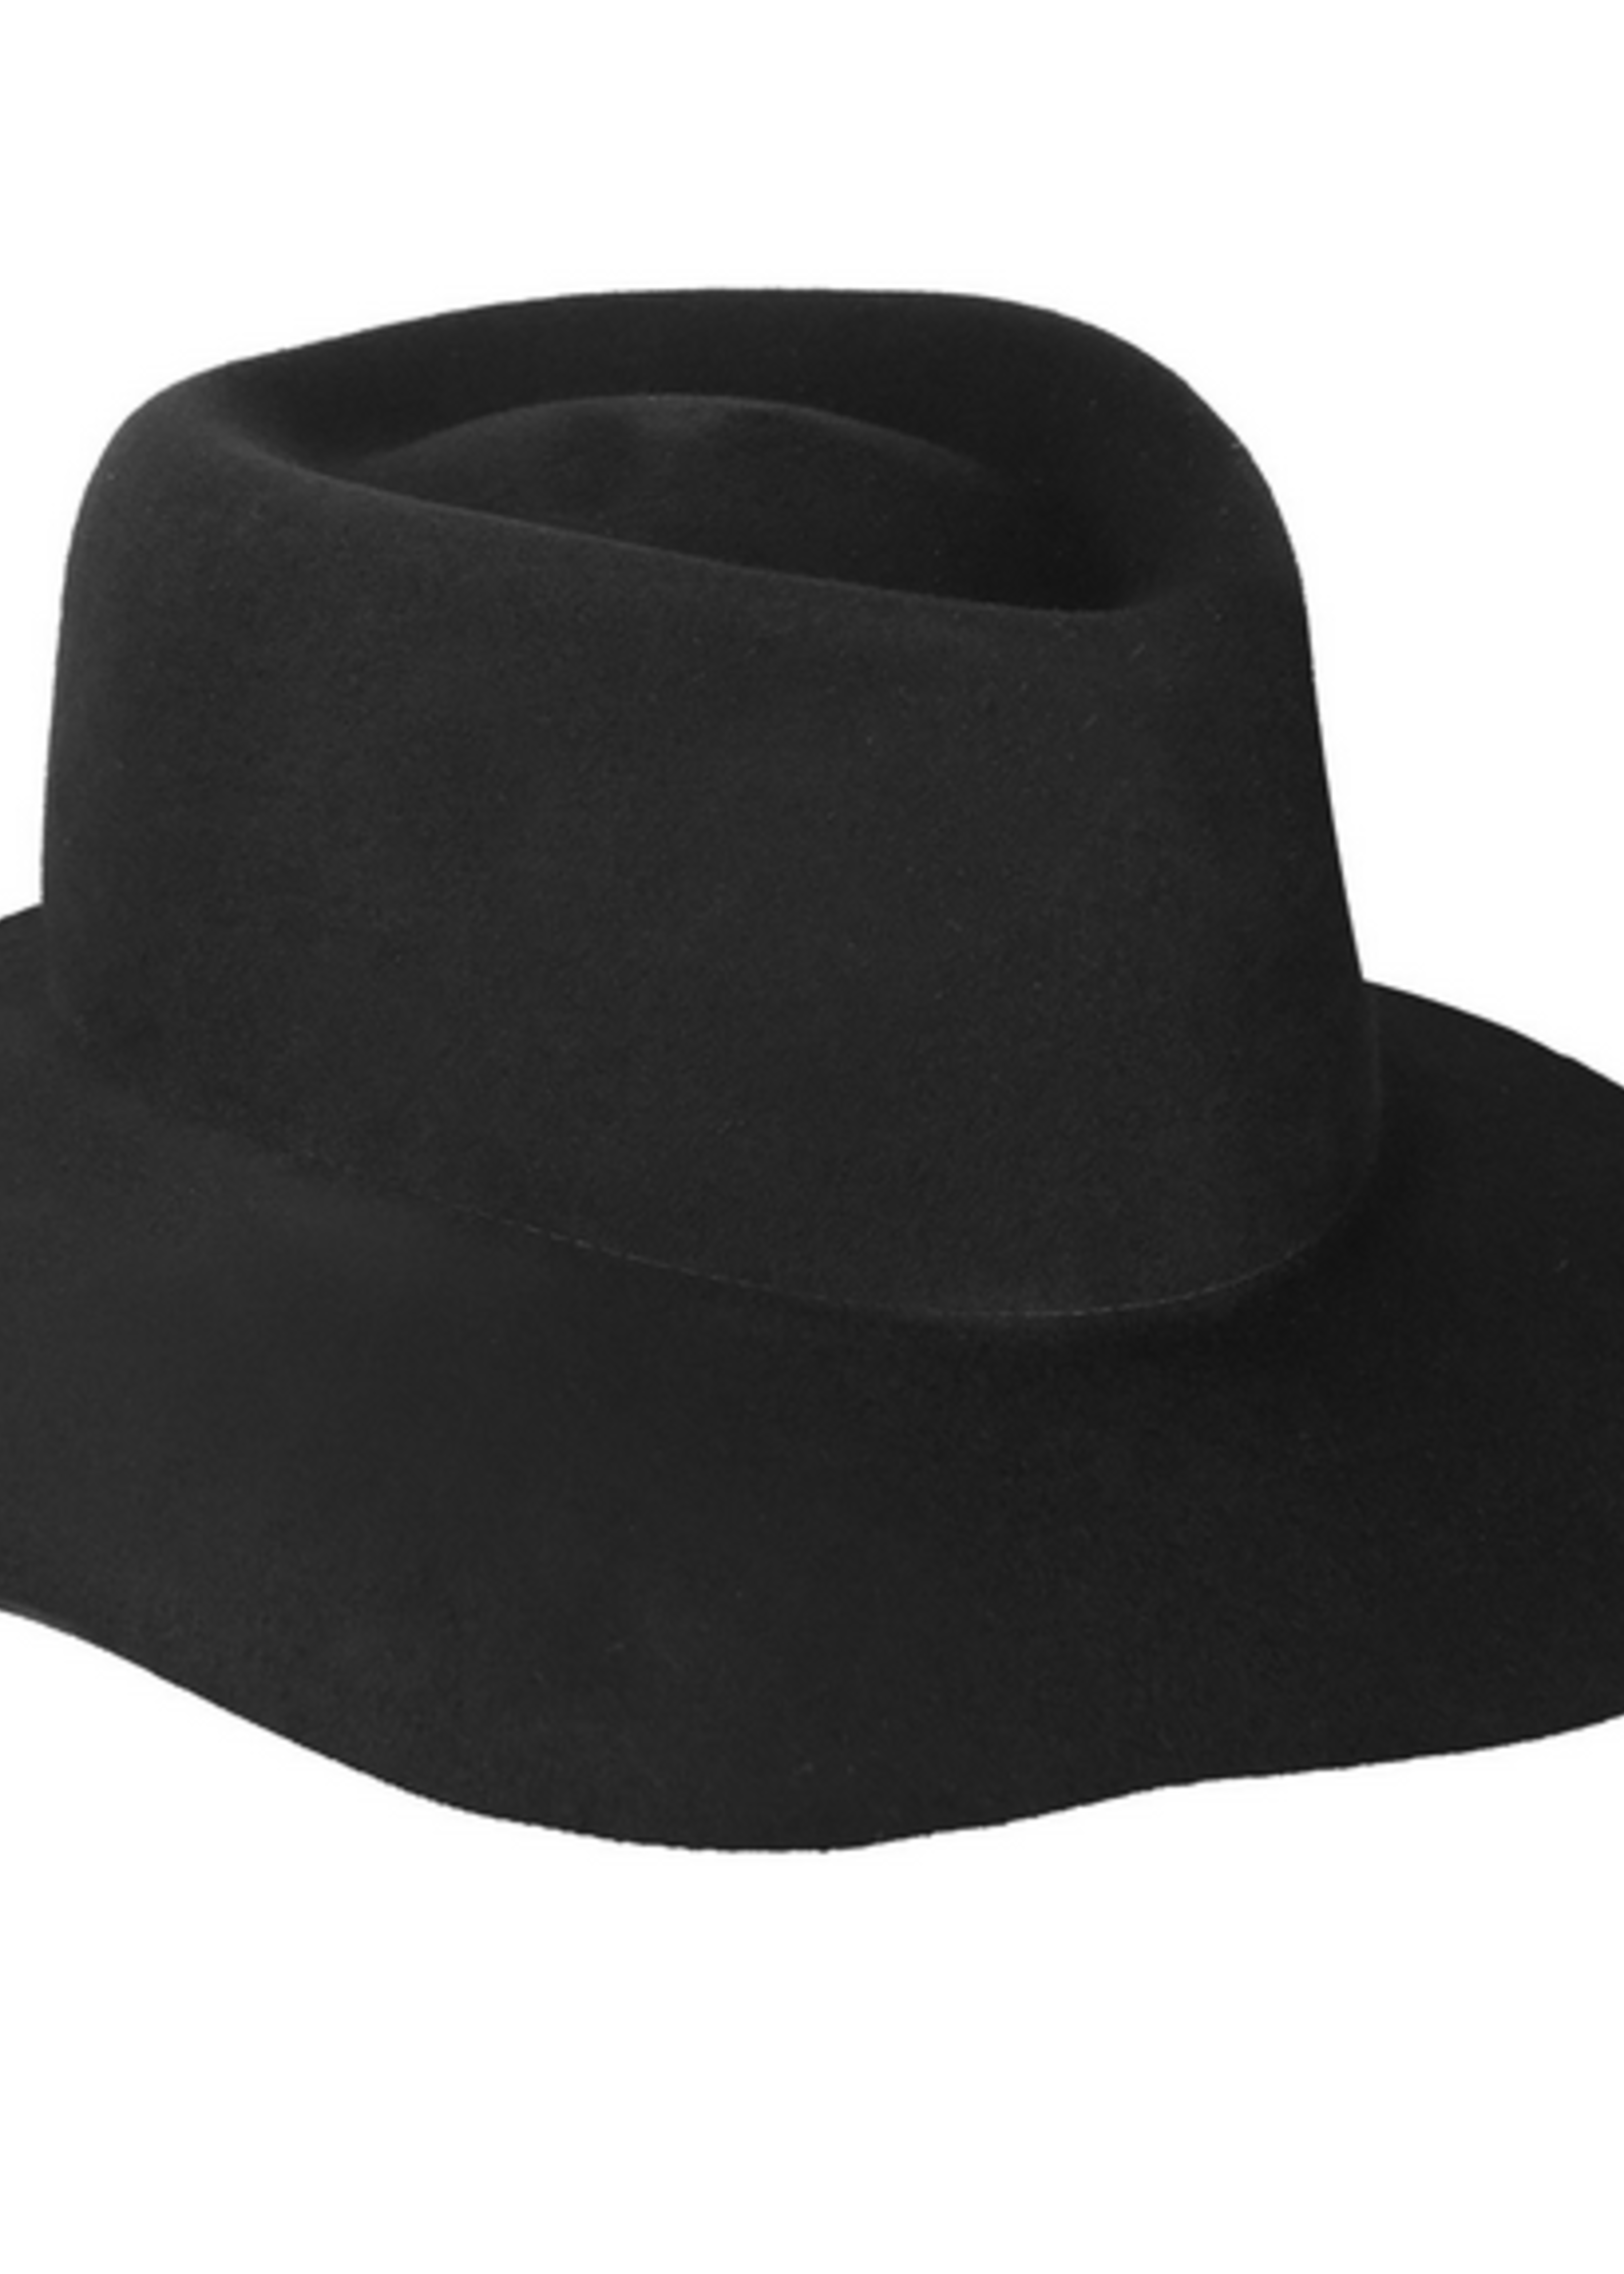 kangol Barclay Trilby hat black Medium